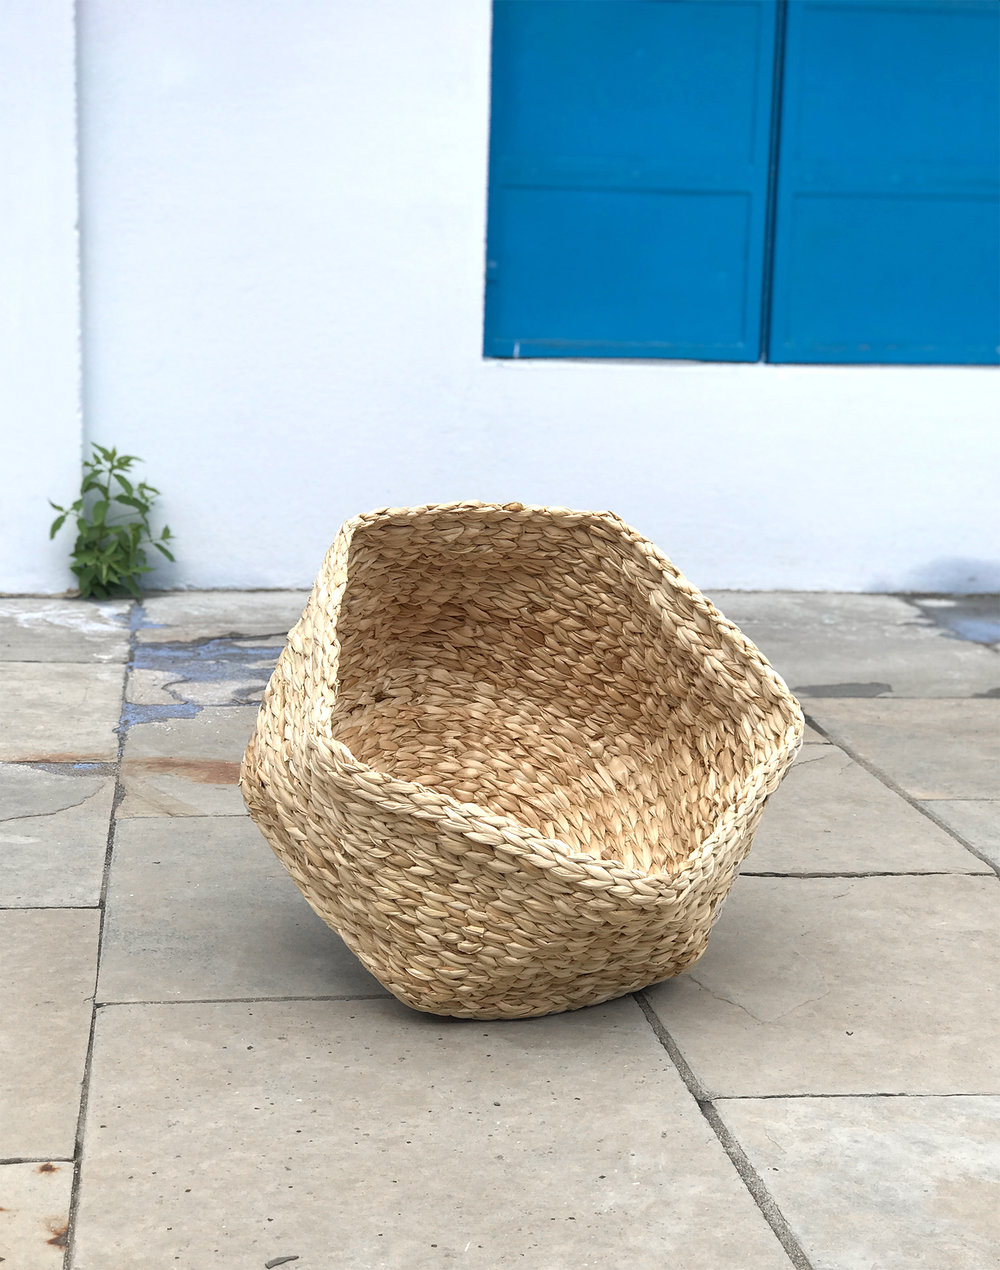 Step 4: The prototype of the polygon basket made of banana bark.